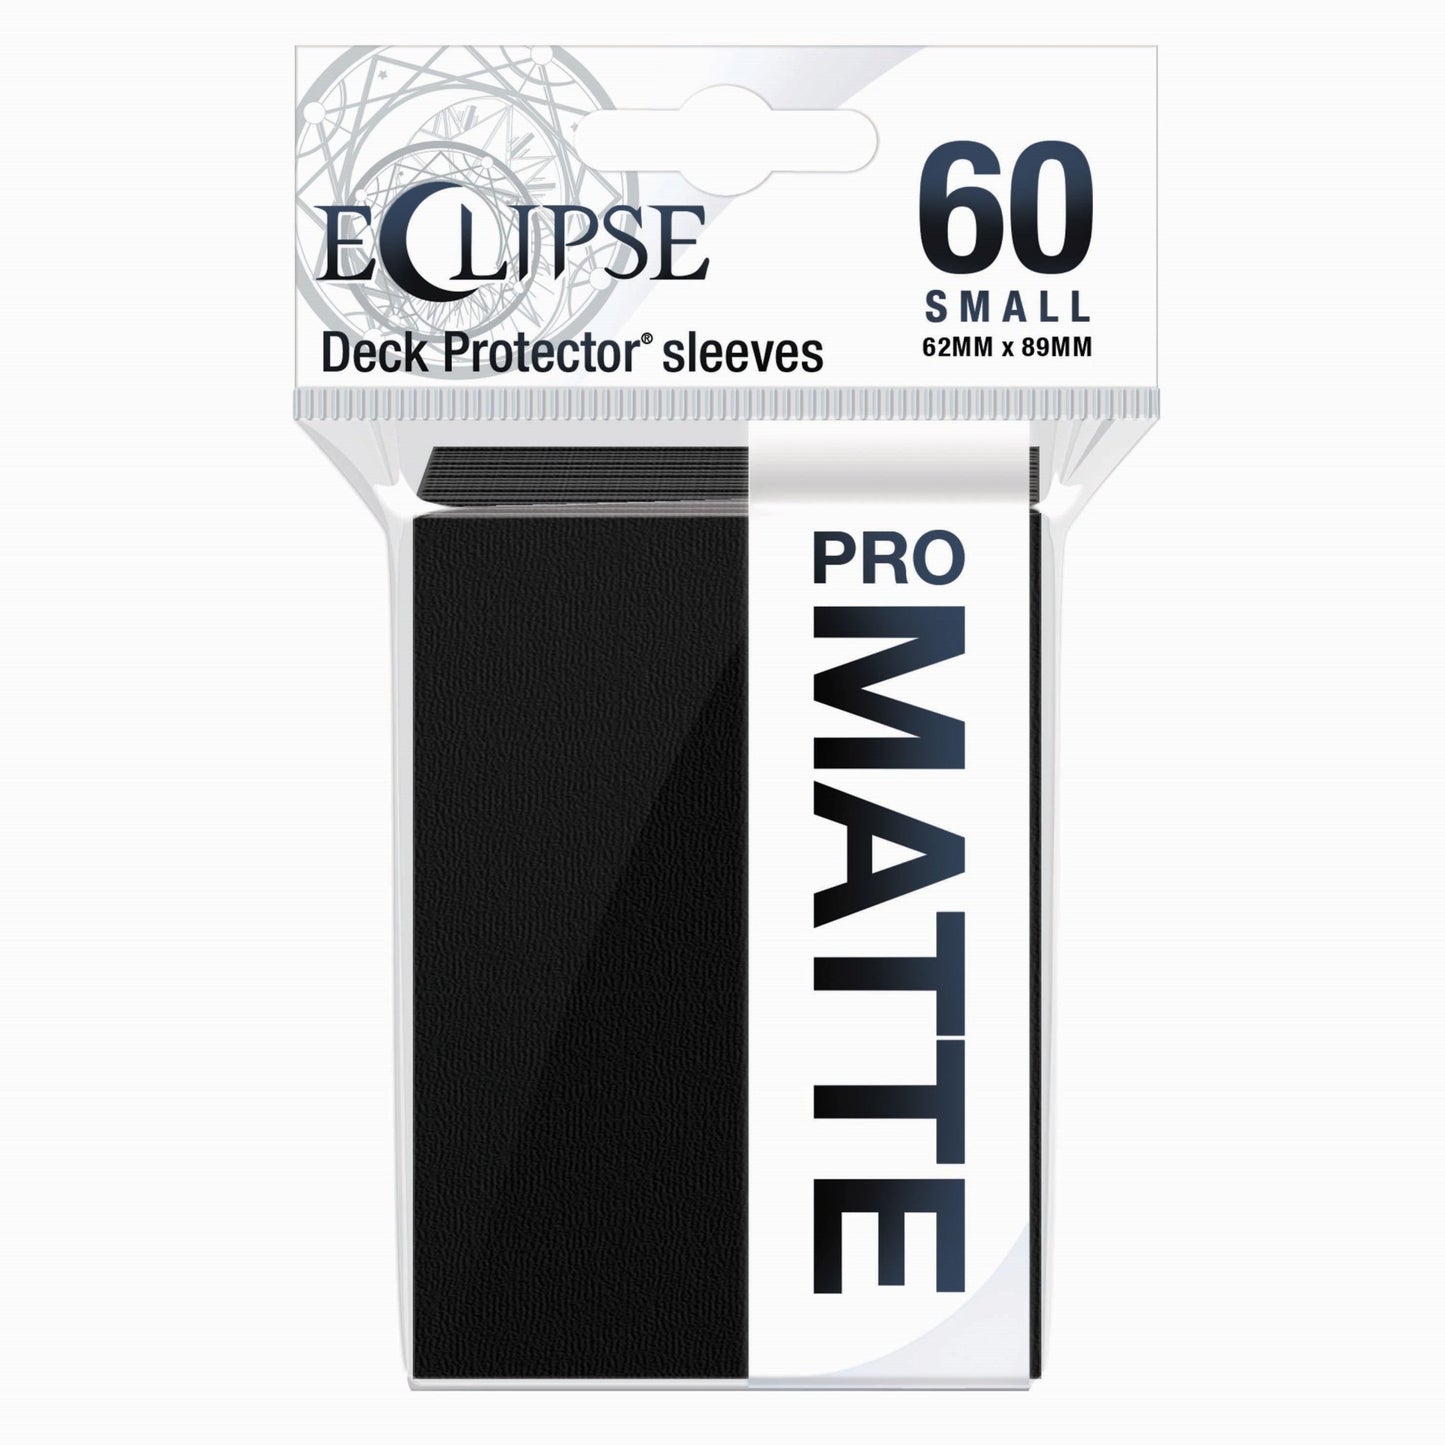 Ultra PRO Deck Protectors Pro-Matte Eclipse 60 Count Small Jet Black - Gamescape